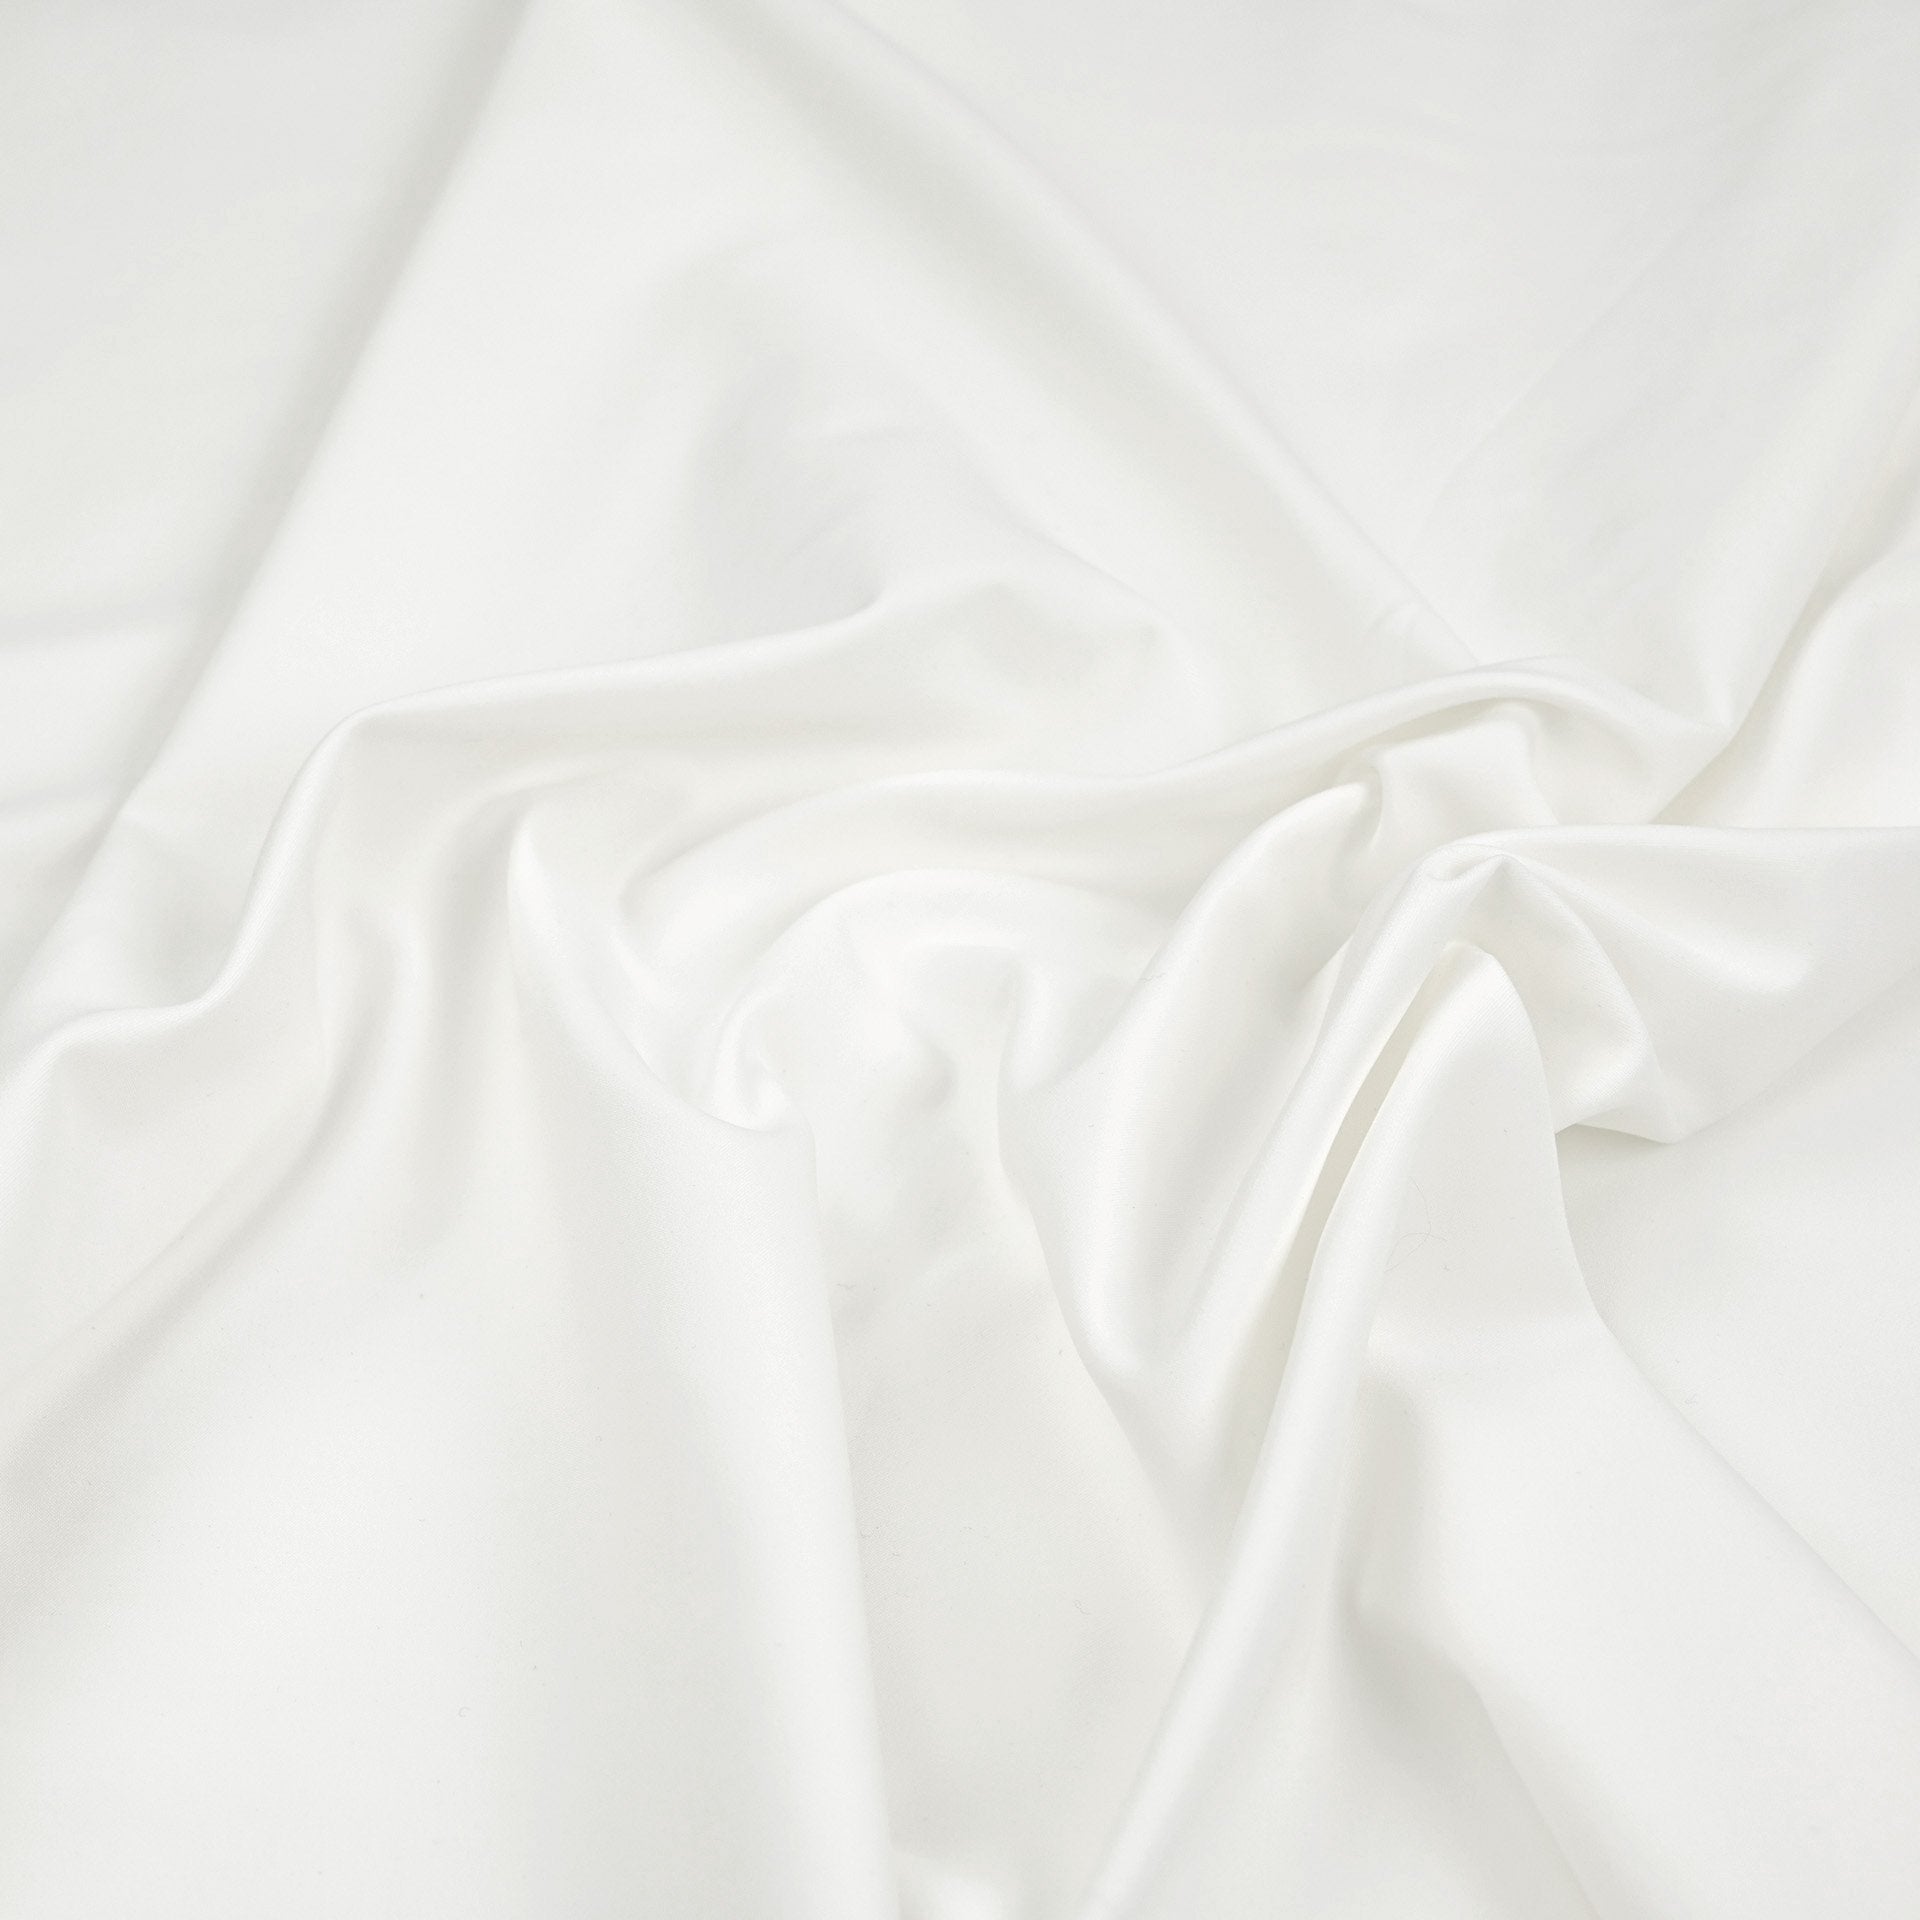 White Stretch Doubleweave Fabric 461